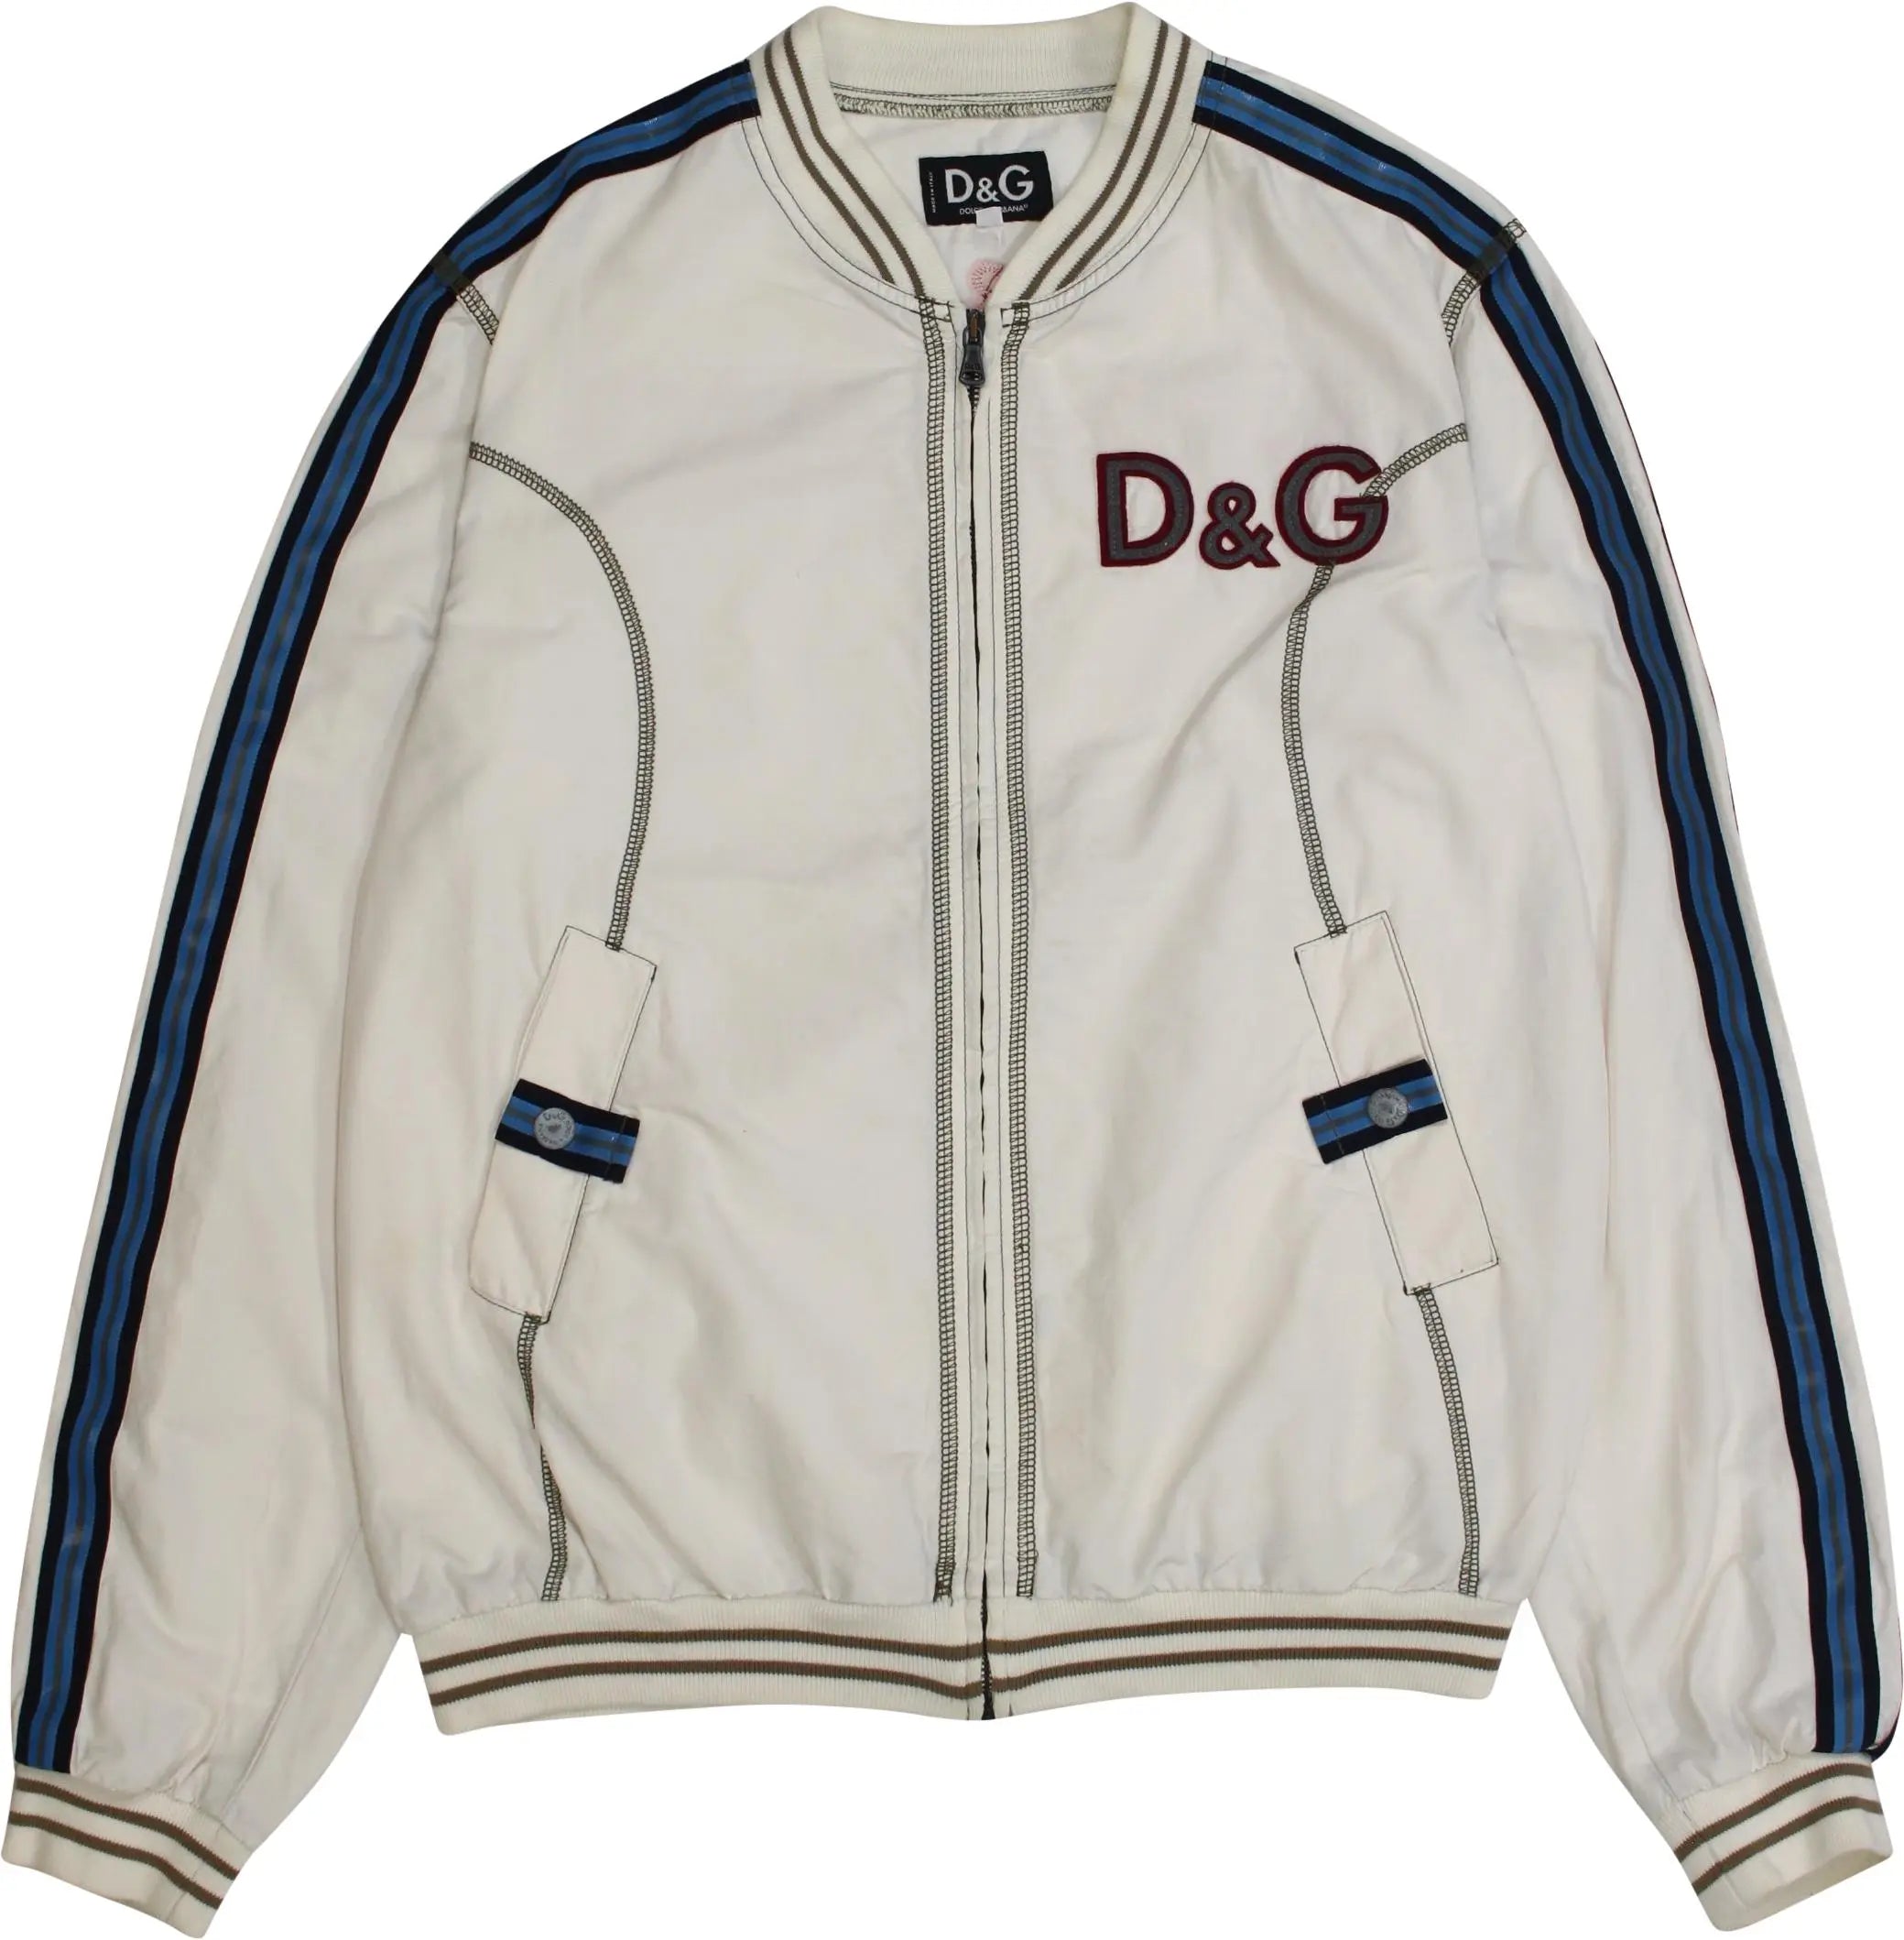 Dolce & Gabbana - Rare Dolce & Gabbana Hard Athletes Track Stripe Jacket- ThriftTale.com - Vintage and second handclothing